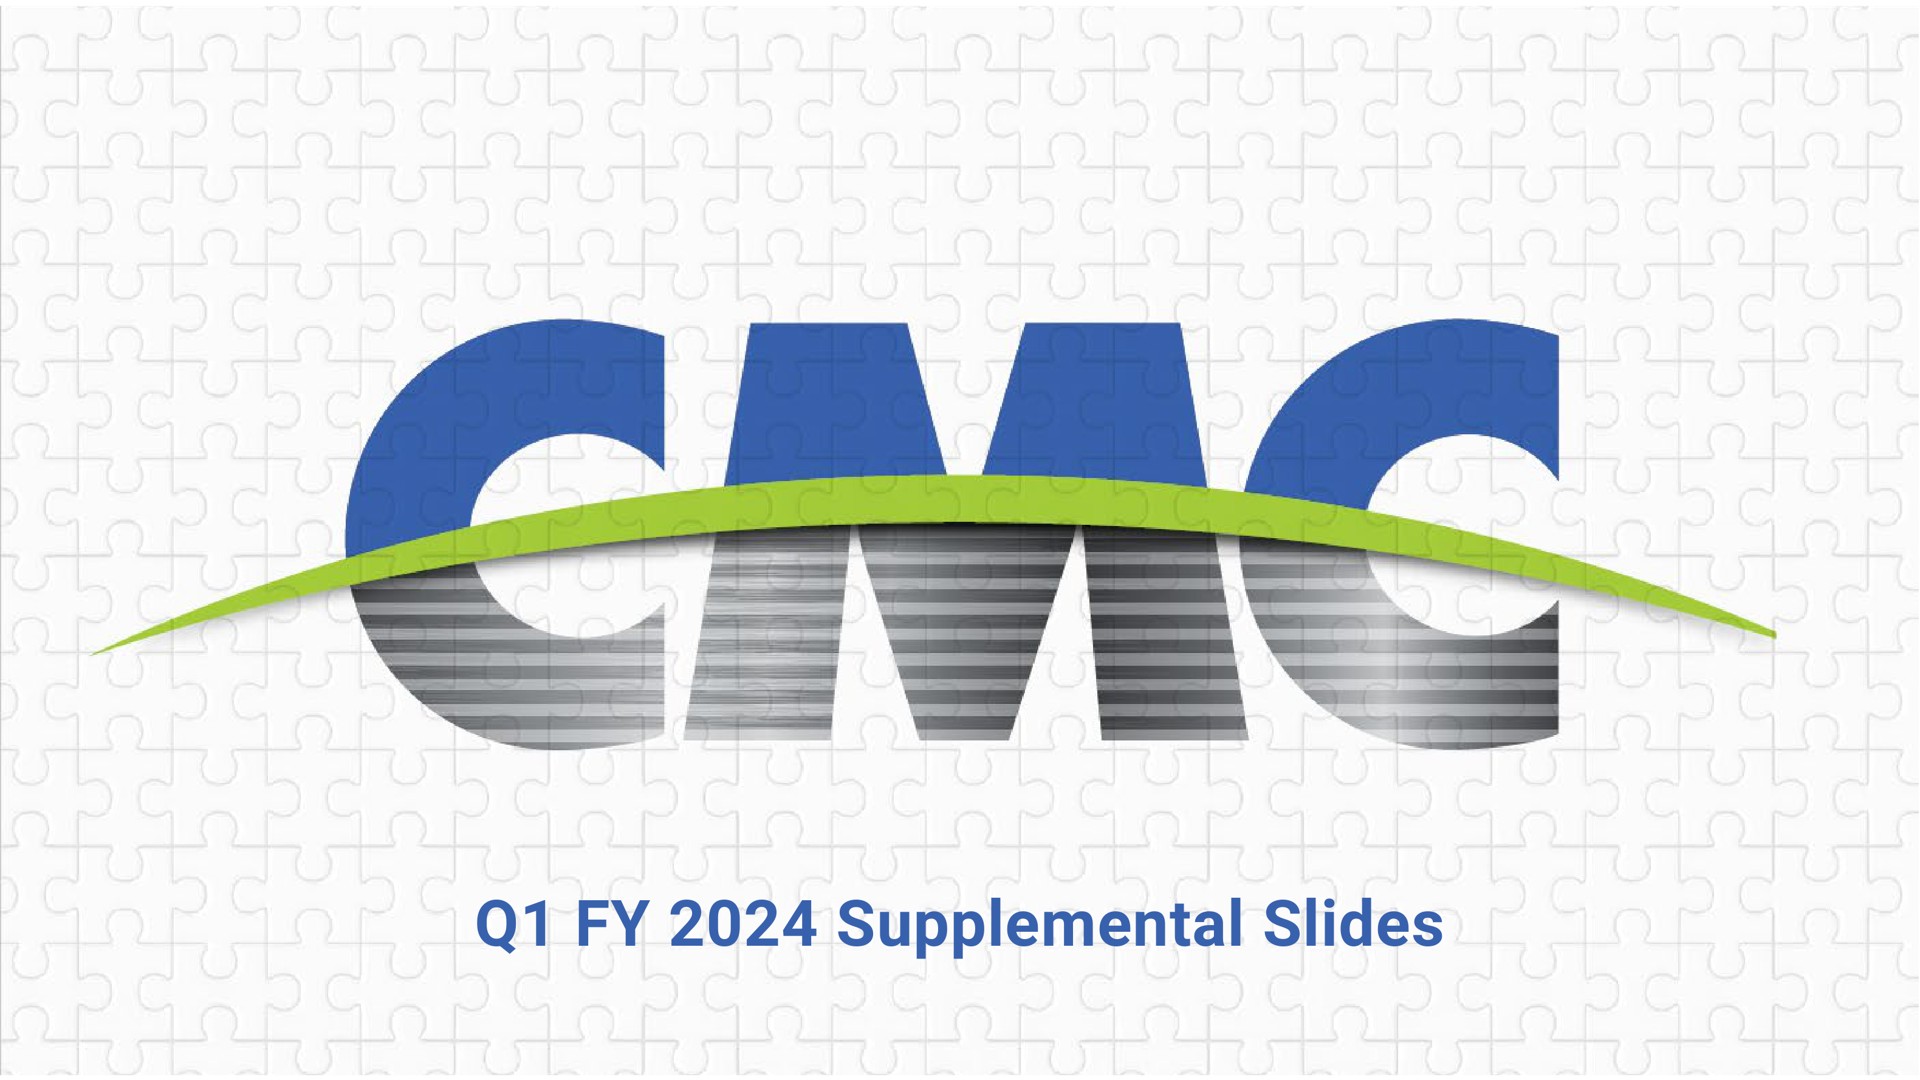 supplemental slides | Commercial Metals Company